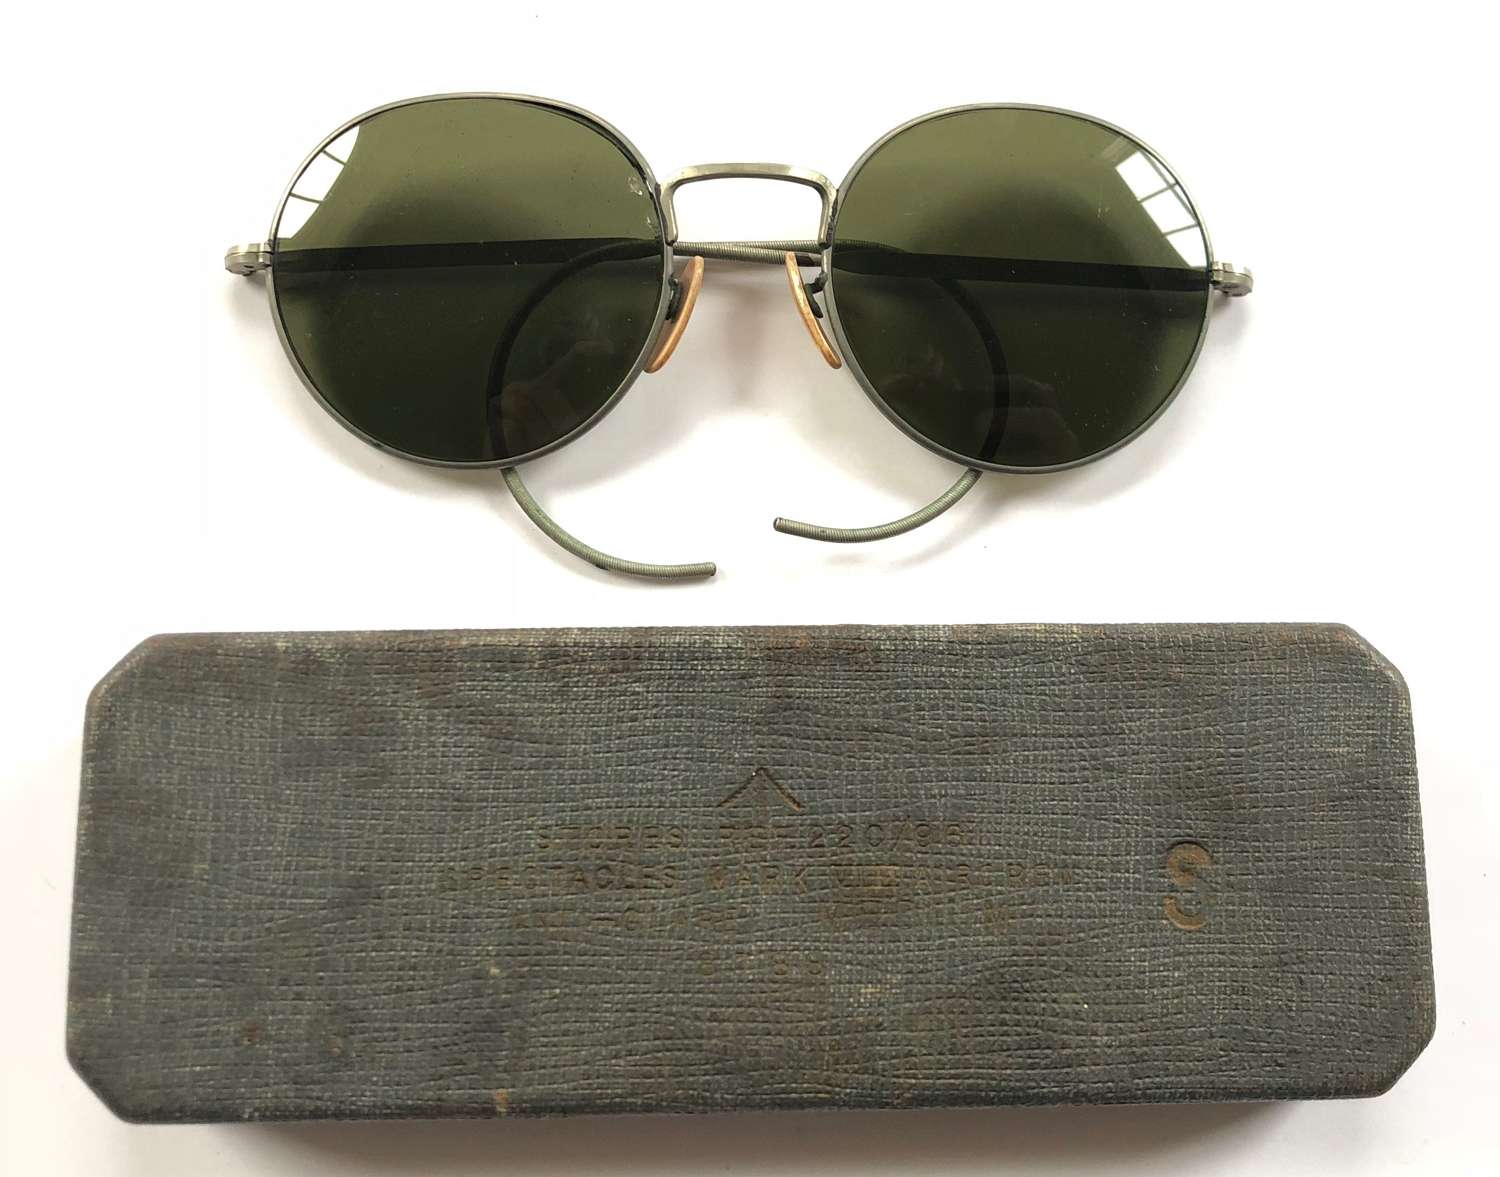 WW2 Pattern RAF Aircrew Sunglasses.